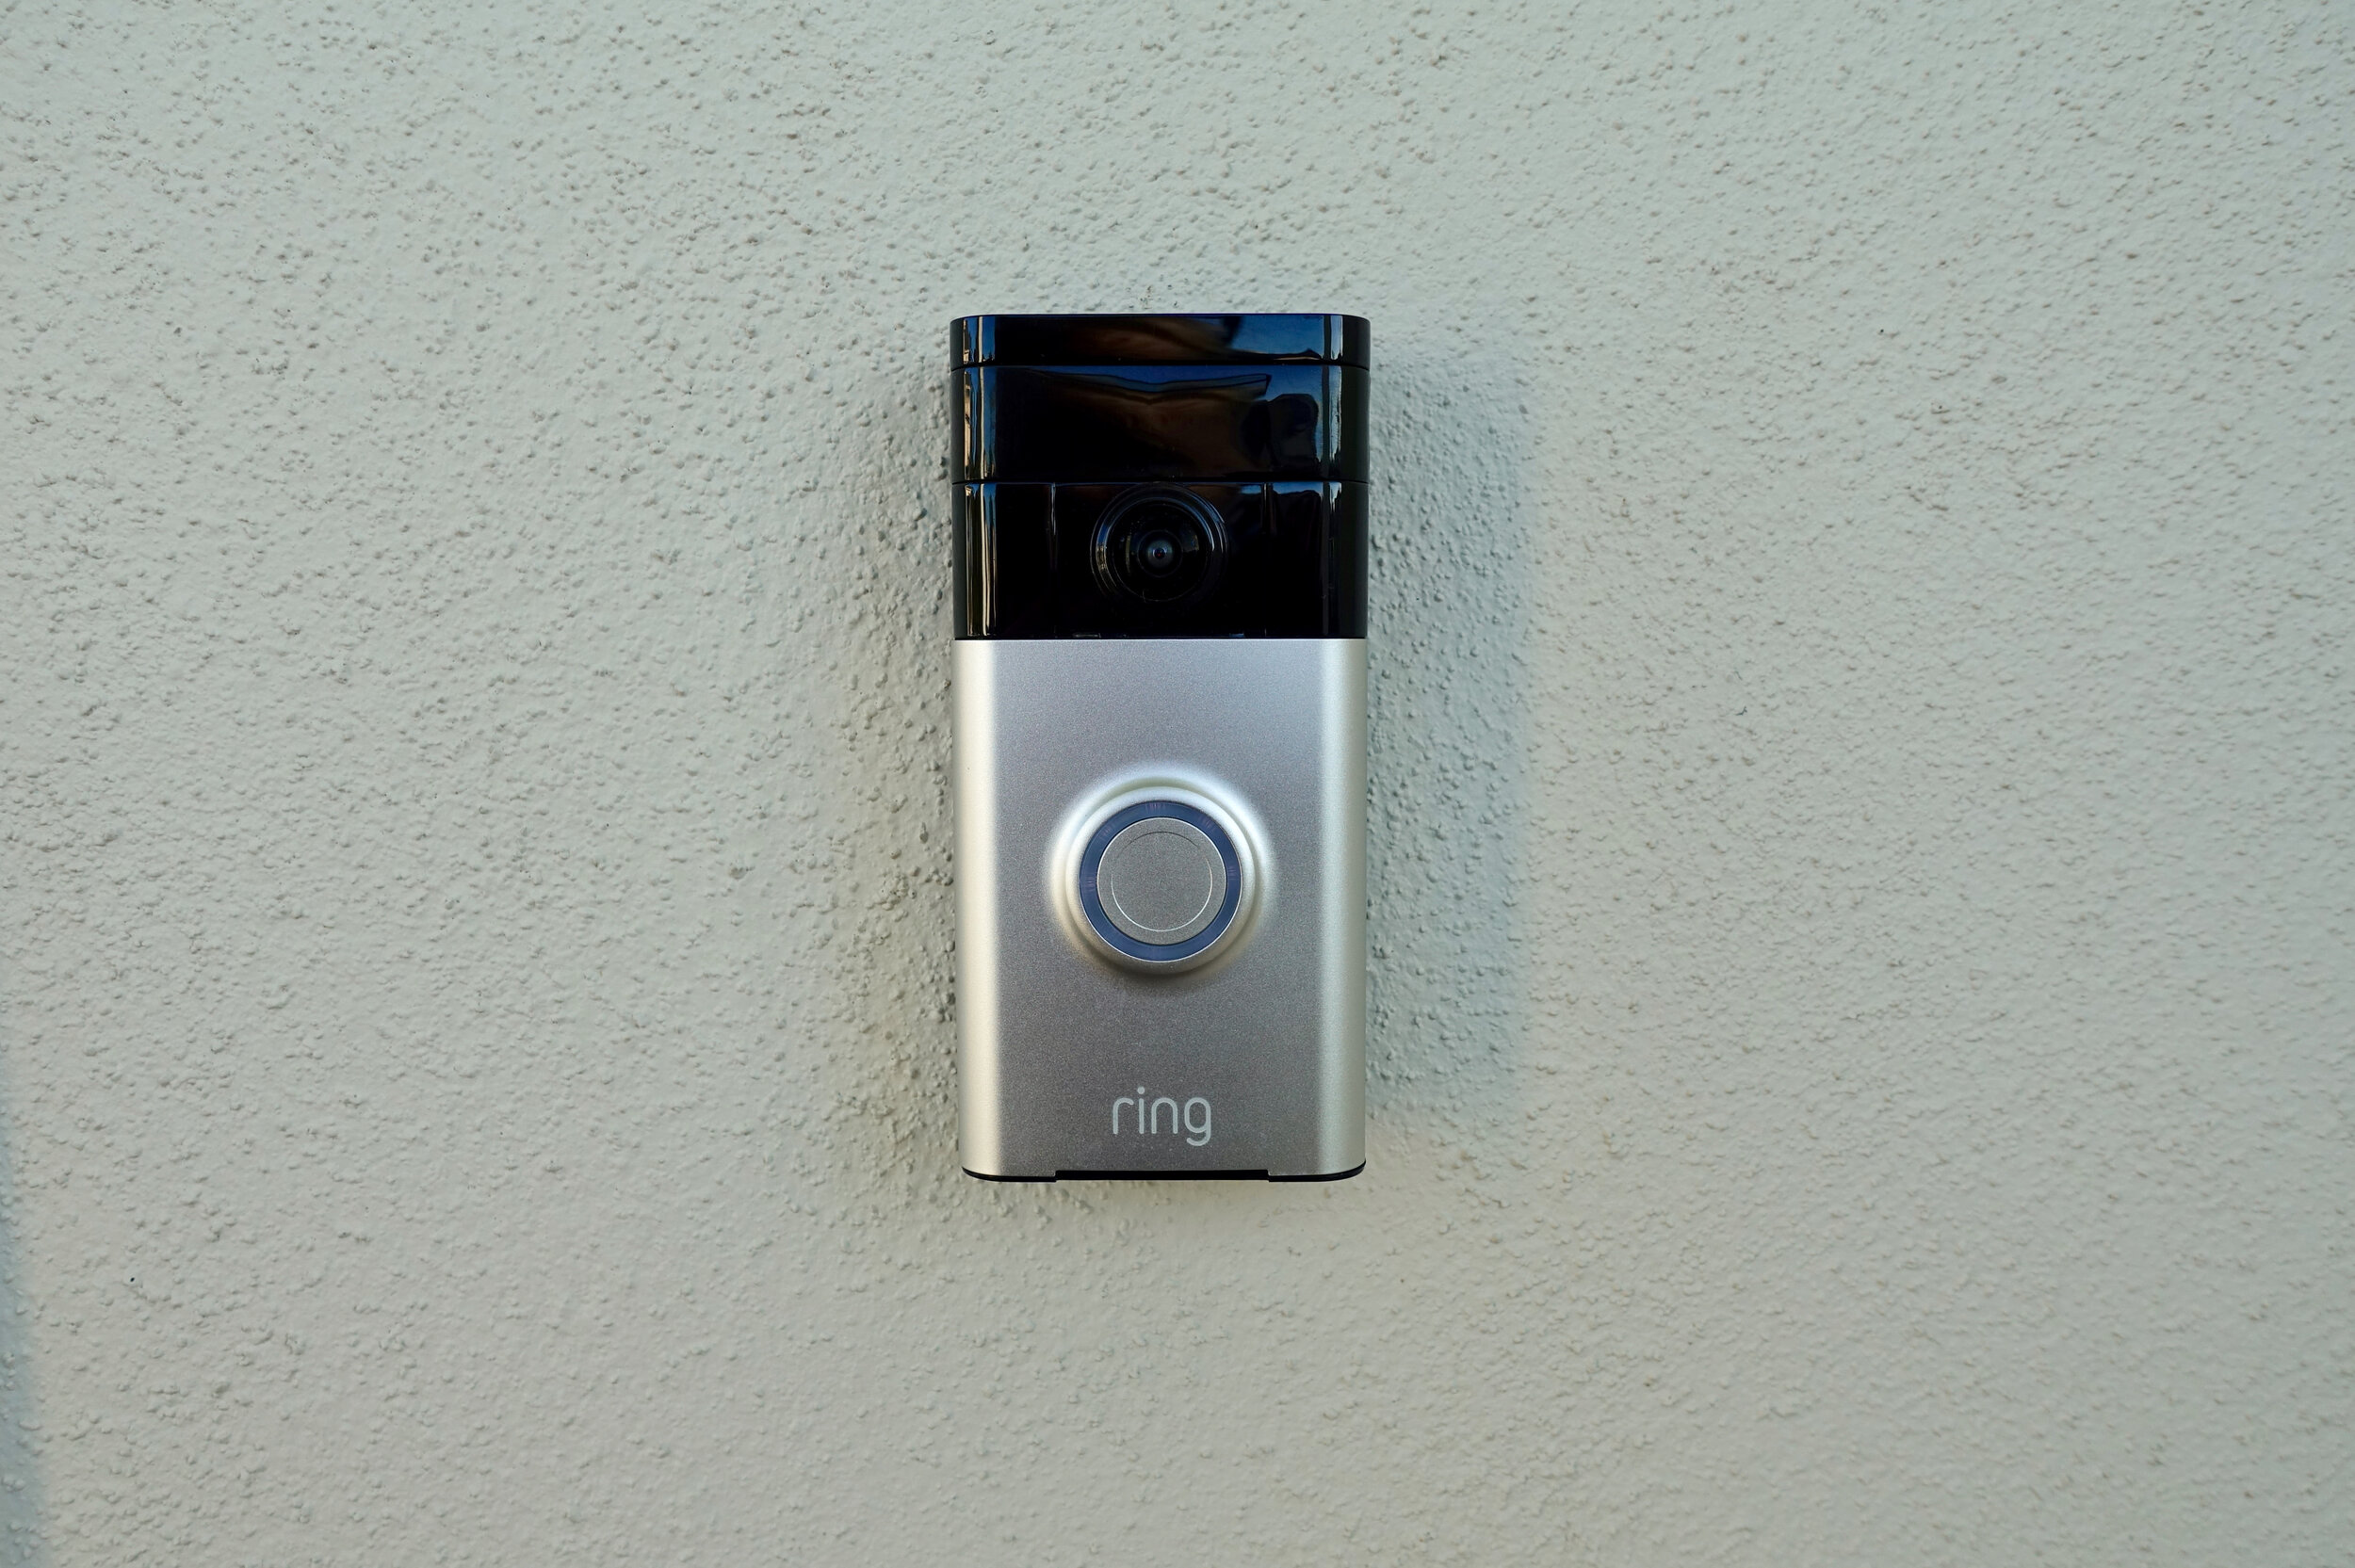 which is the best video doorbell to buy